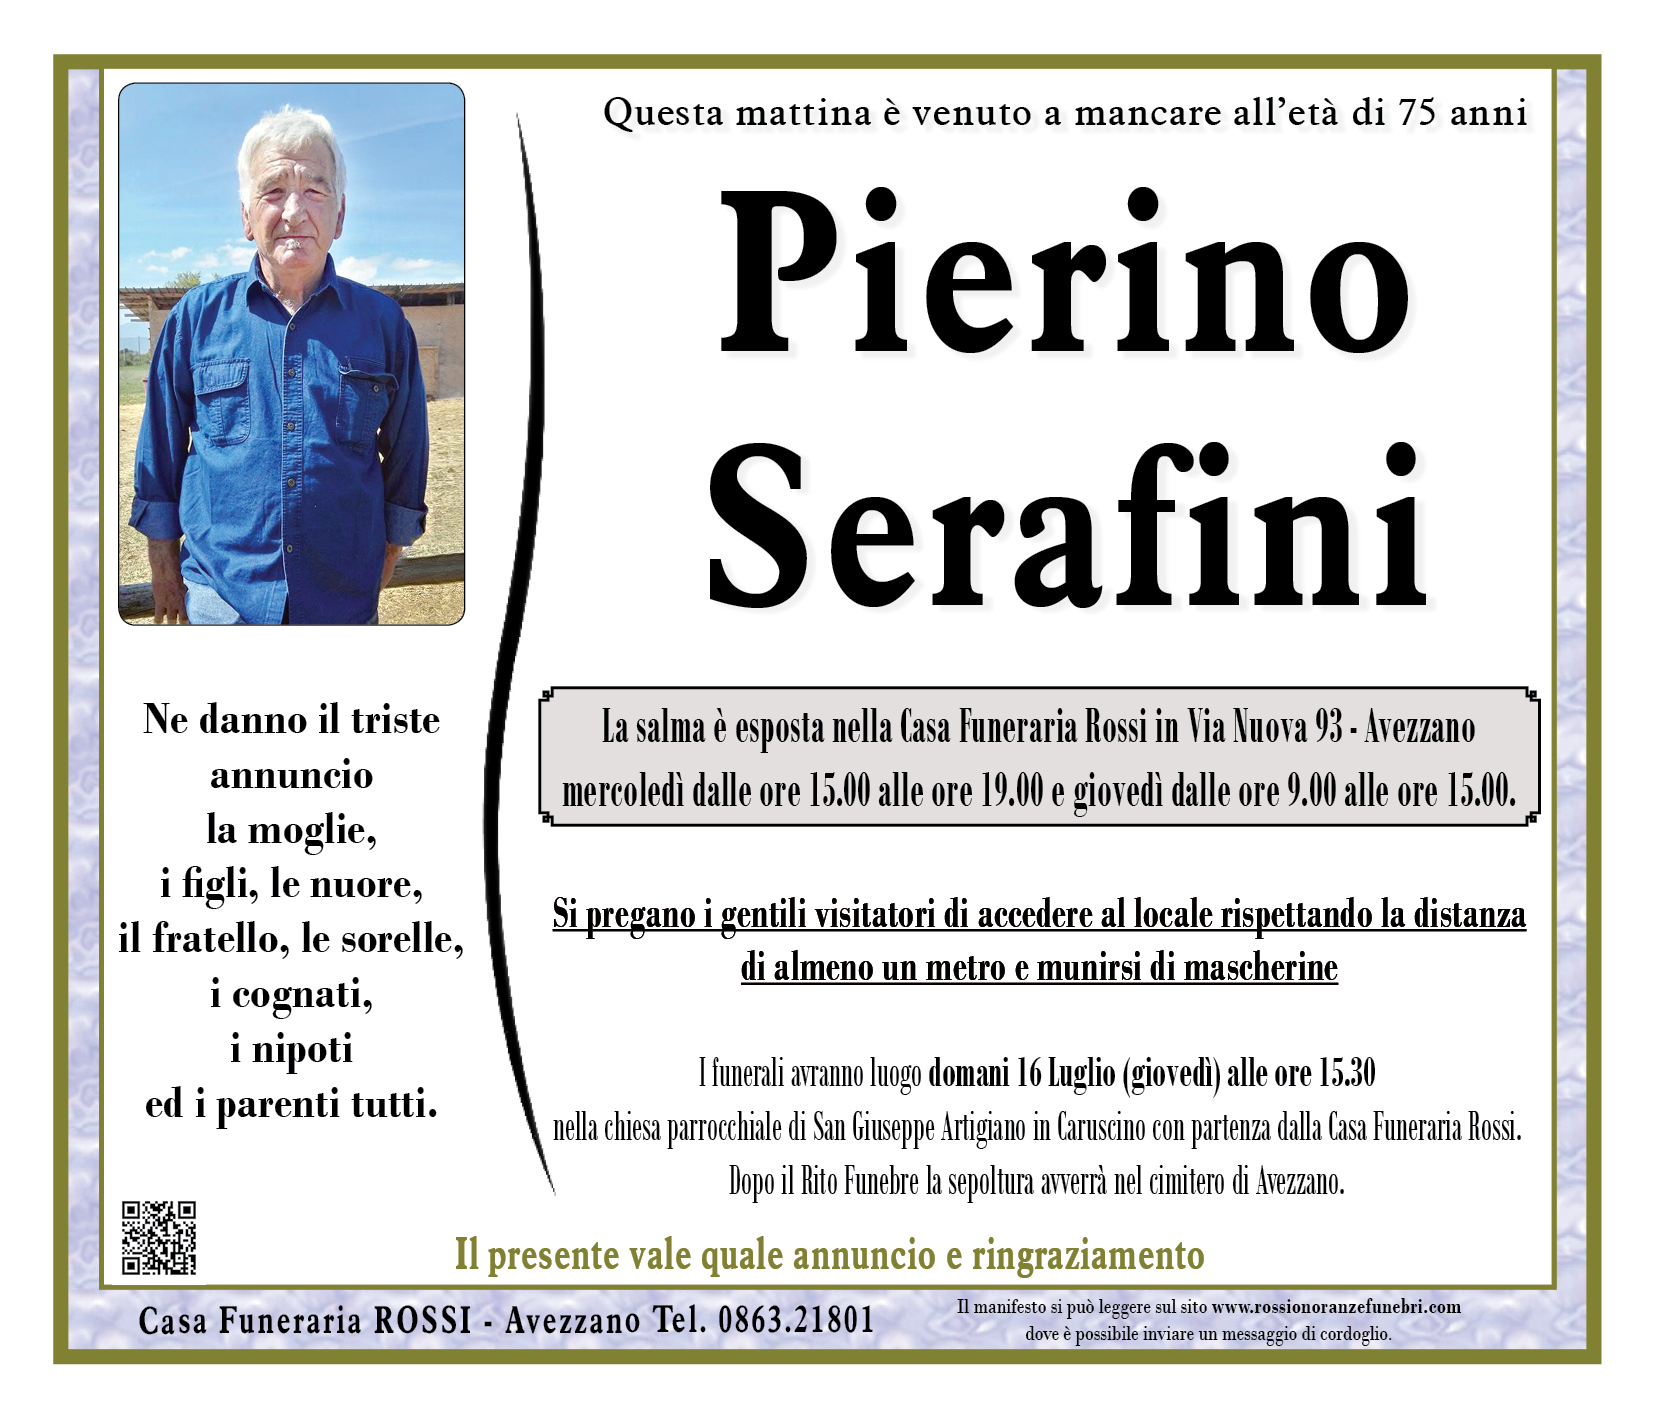 Pierino Serafini